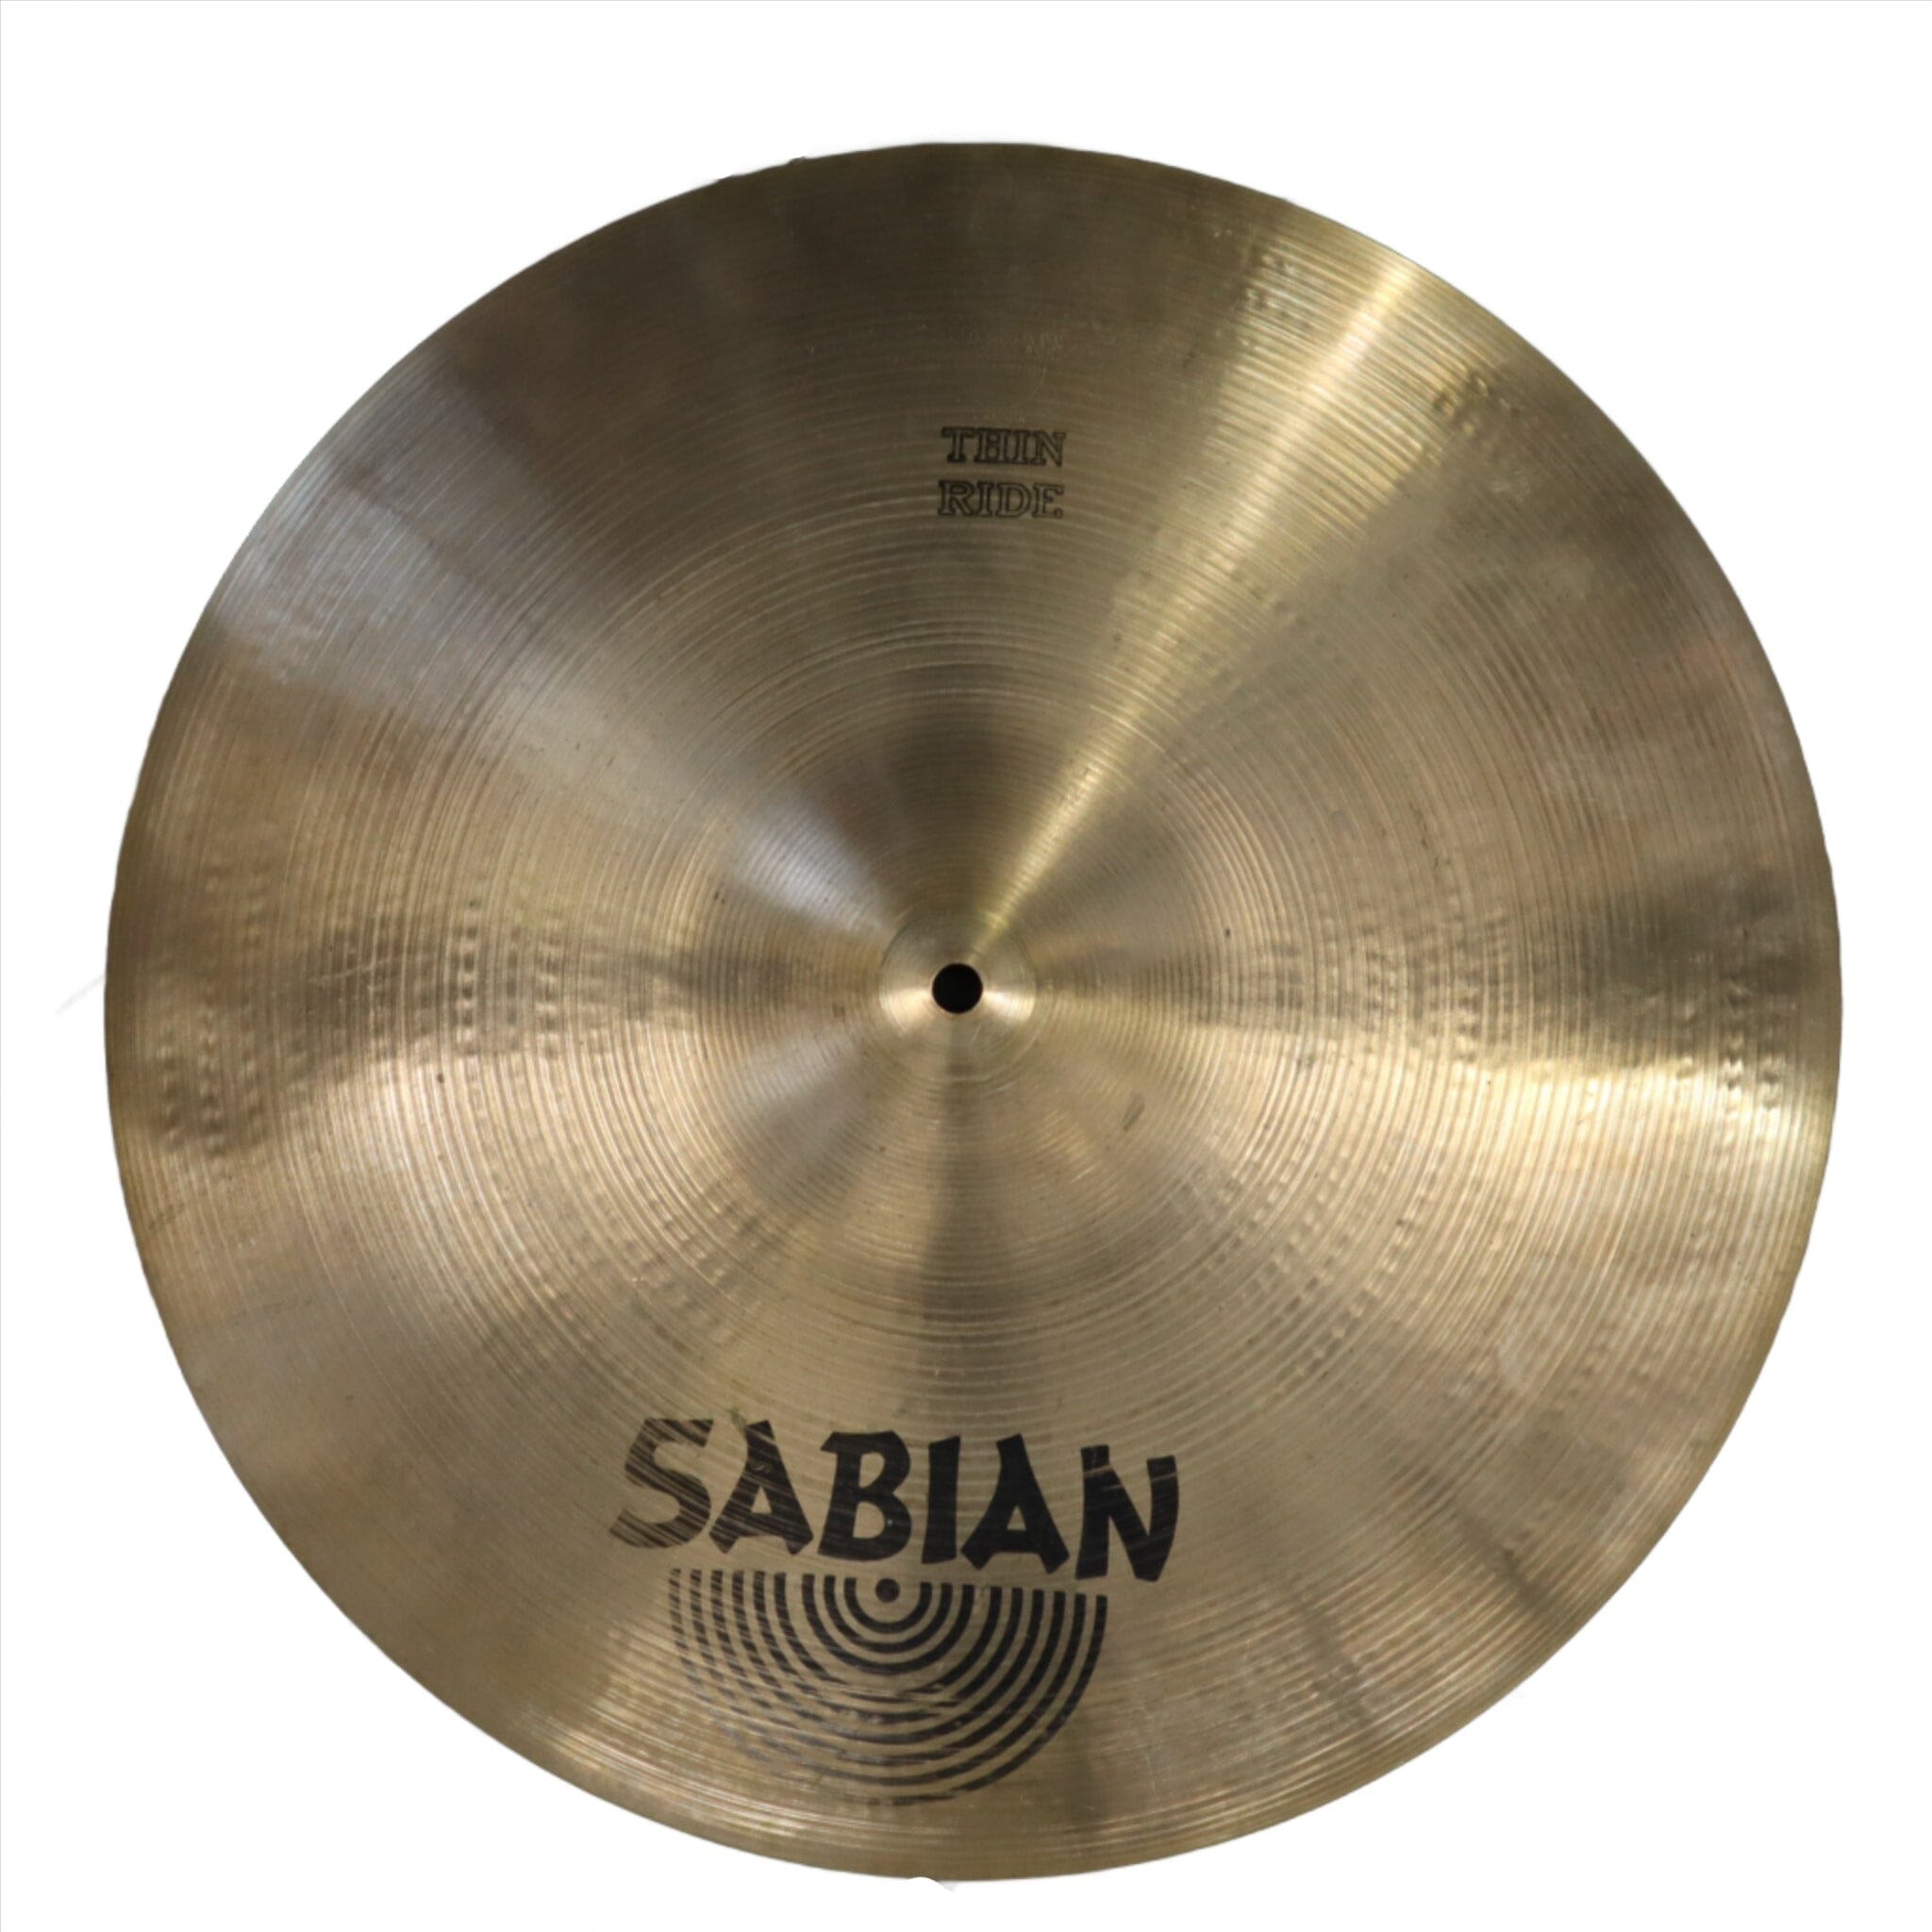 Sabian Thin Ride 80s 18" USED SABIAN CYMBAL Sabian 